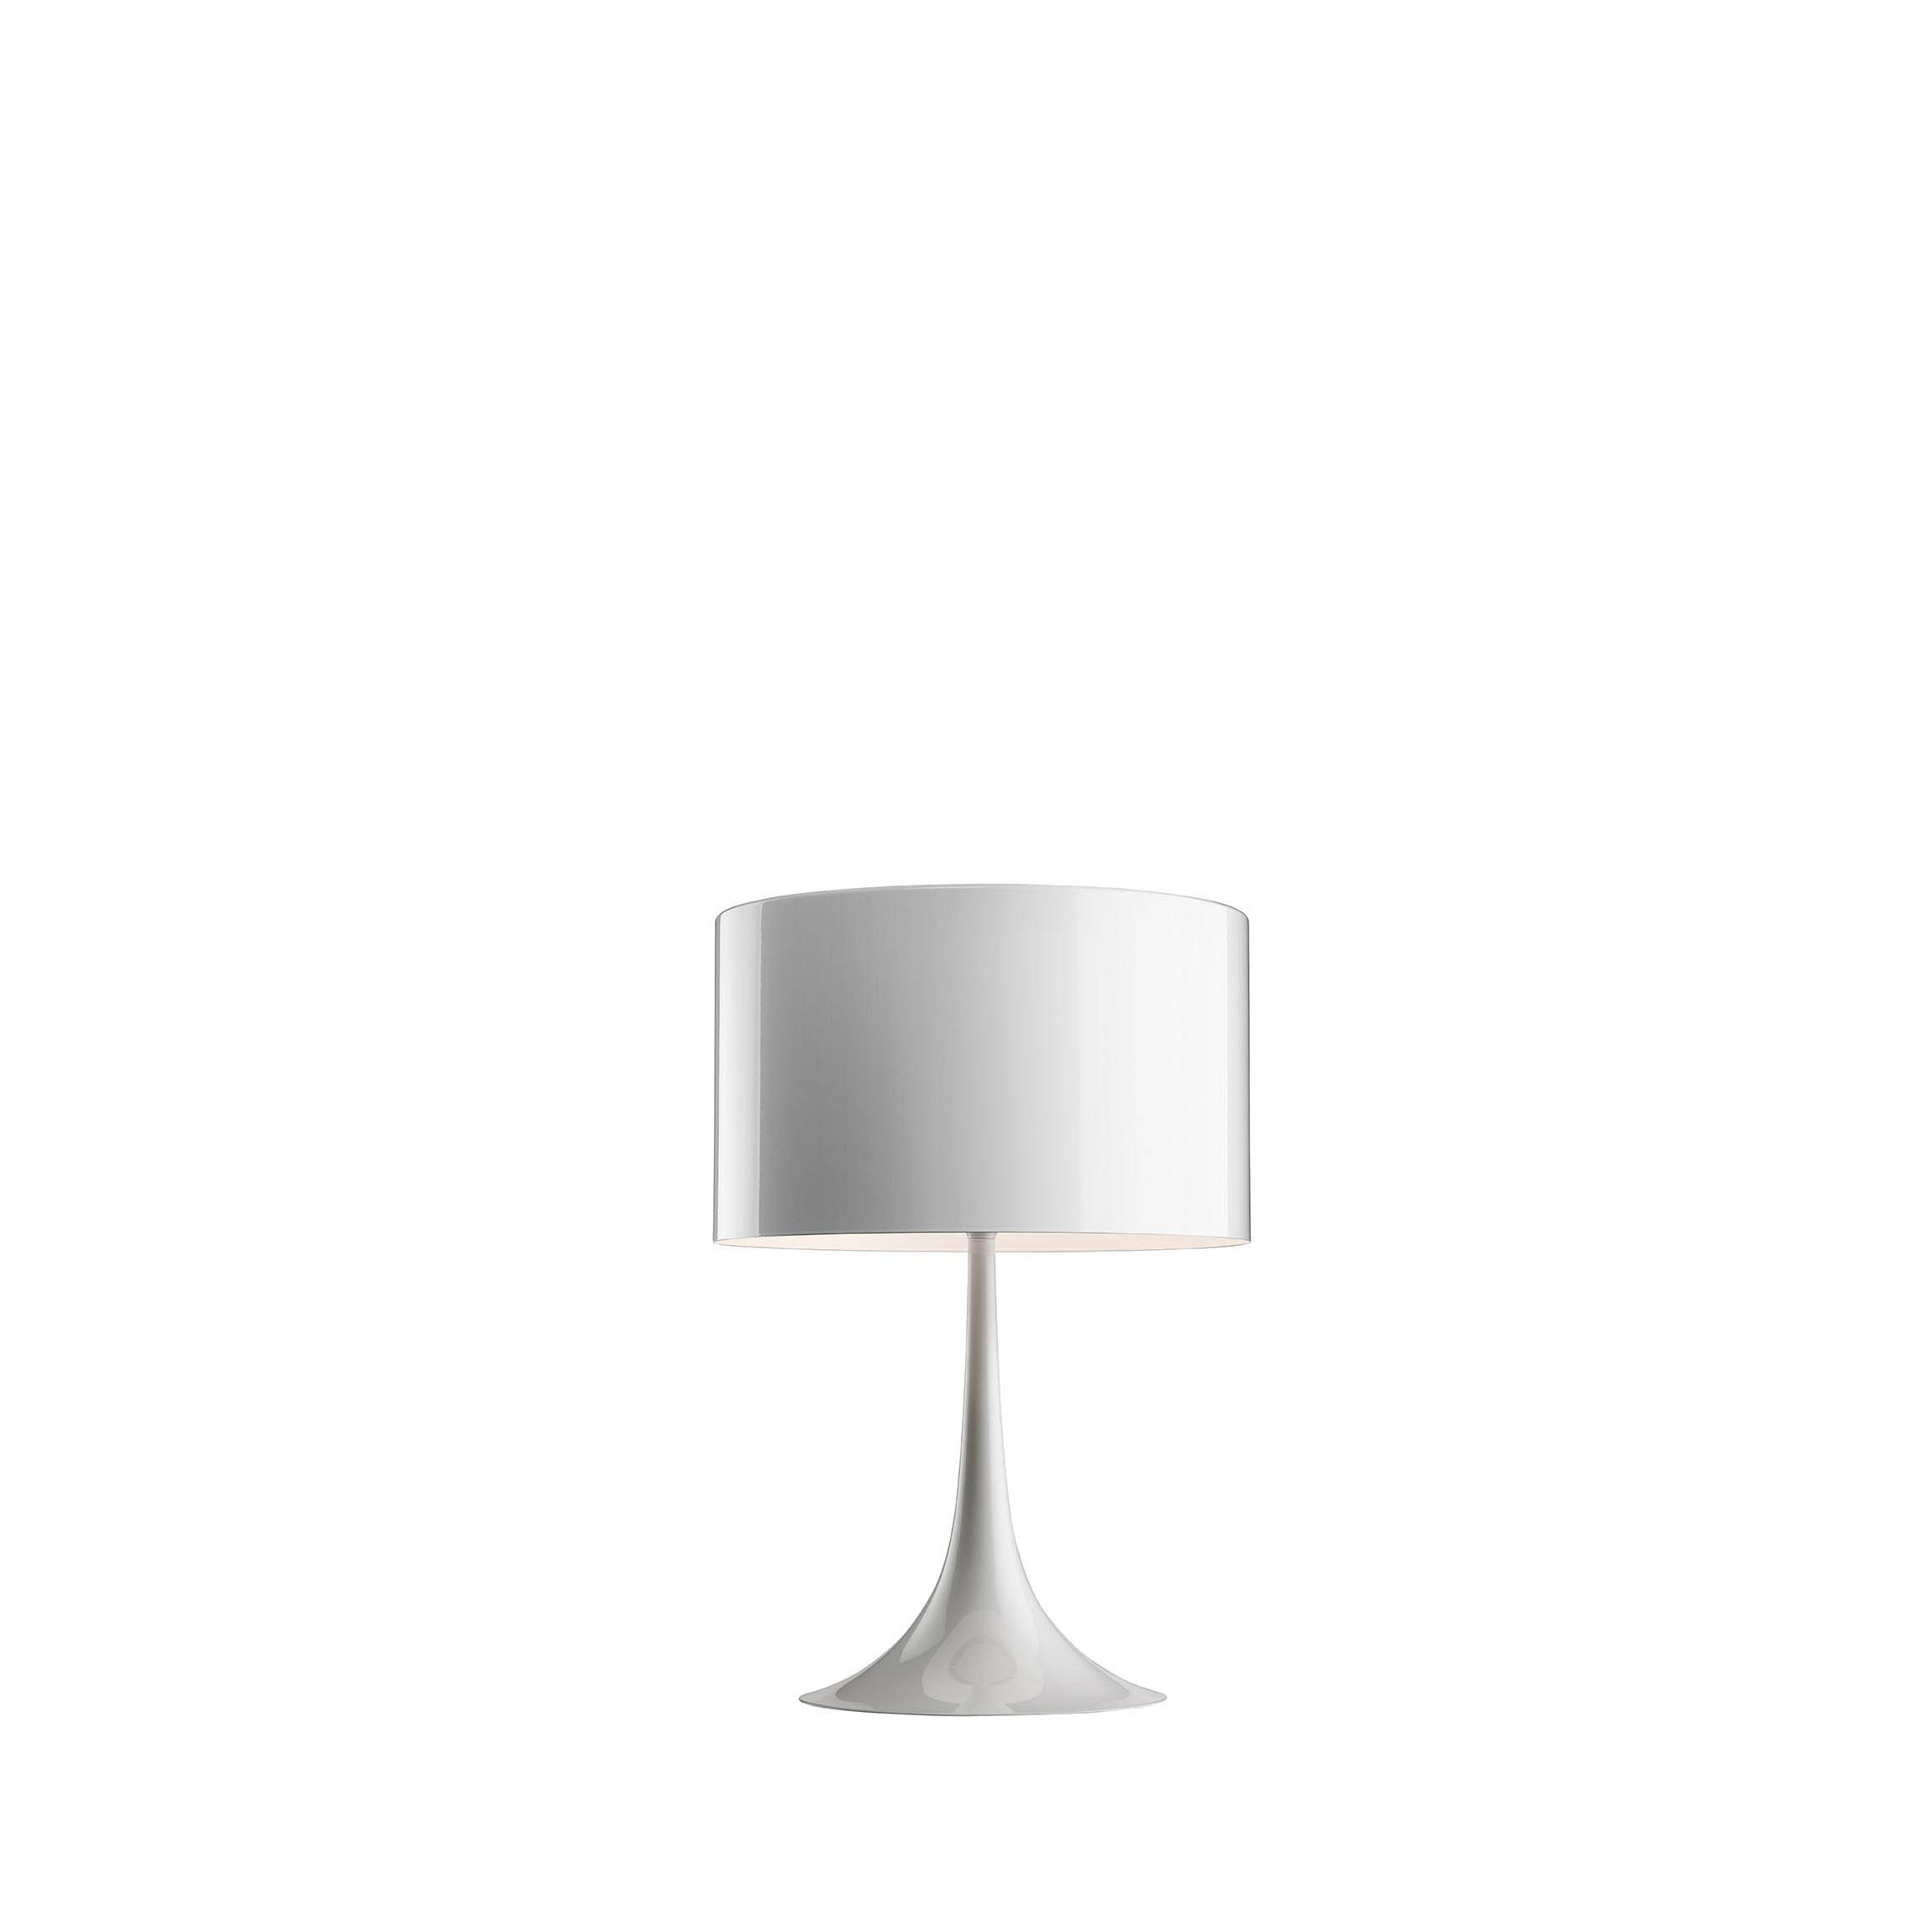 Andet detail En smule Spun Light Table 1 Modern Lamp by Sebastian Wrong | Flos USA